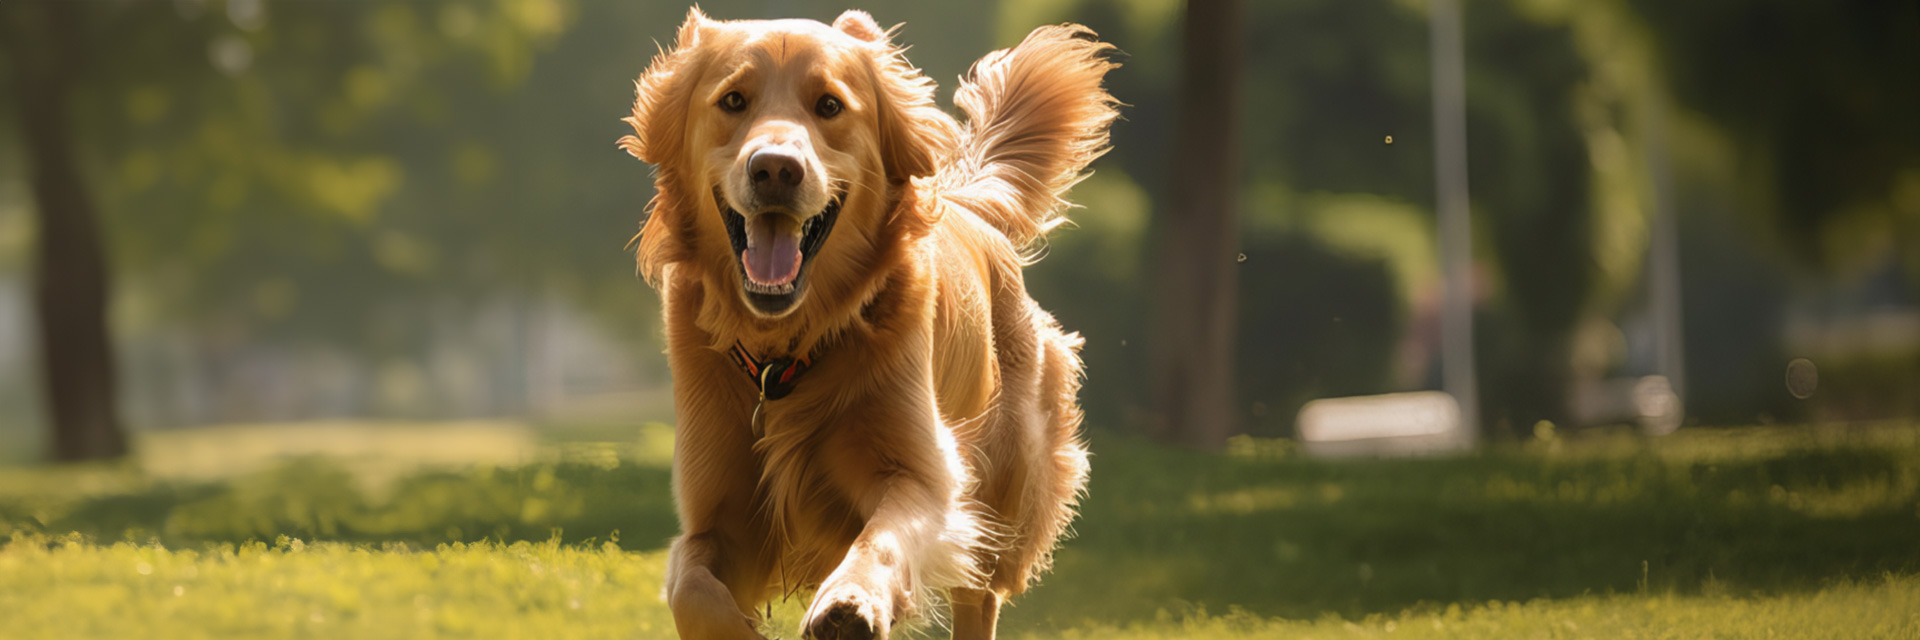 Preventive Care - Happy Dog Running